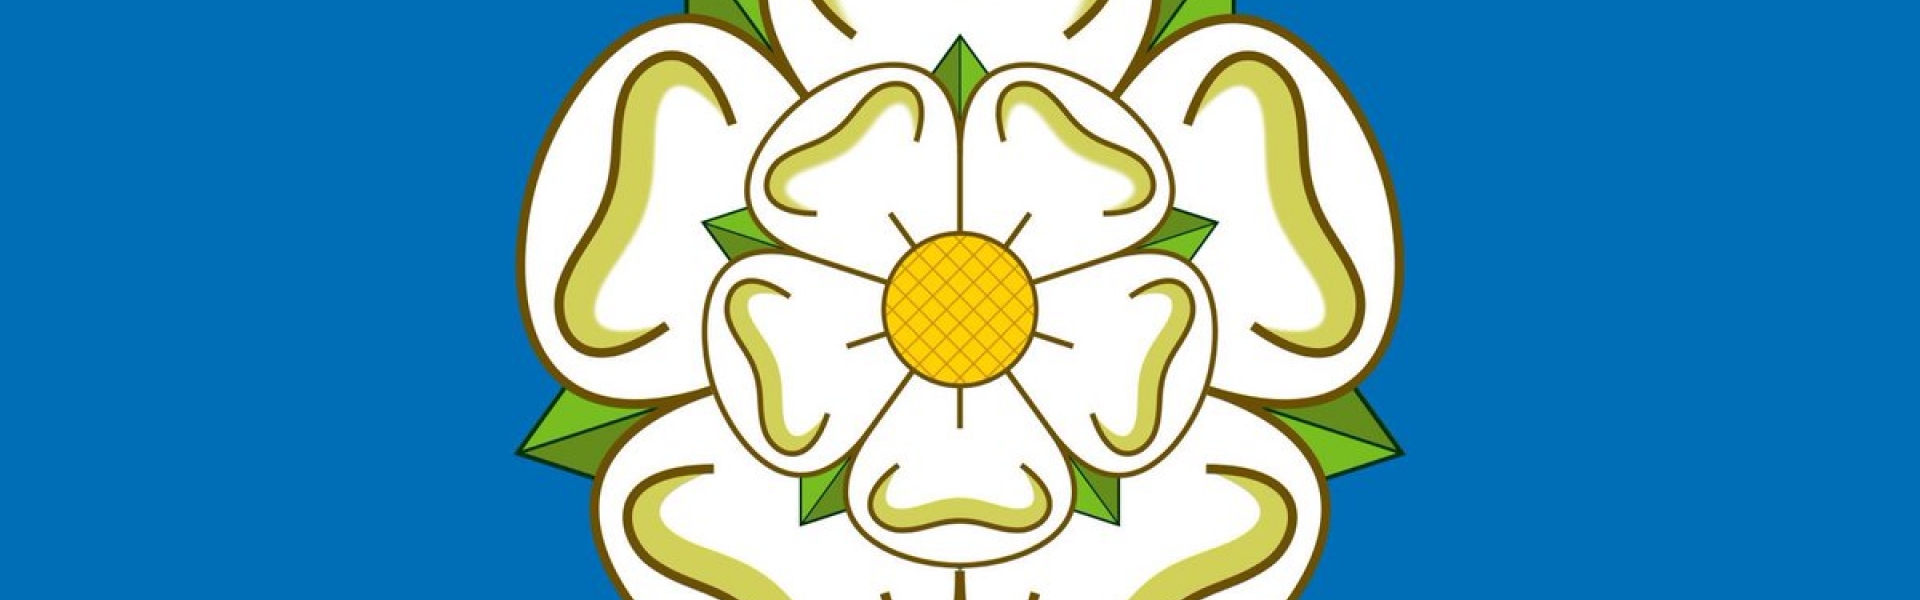 Happy Yorkshire Day